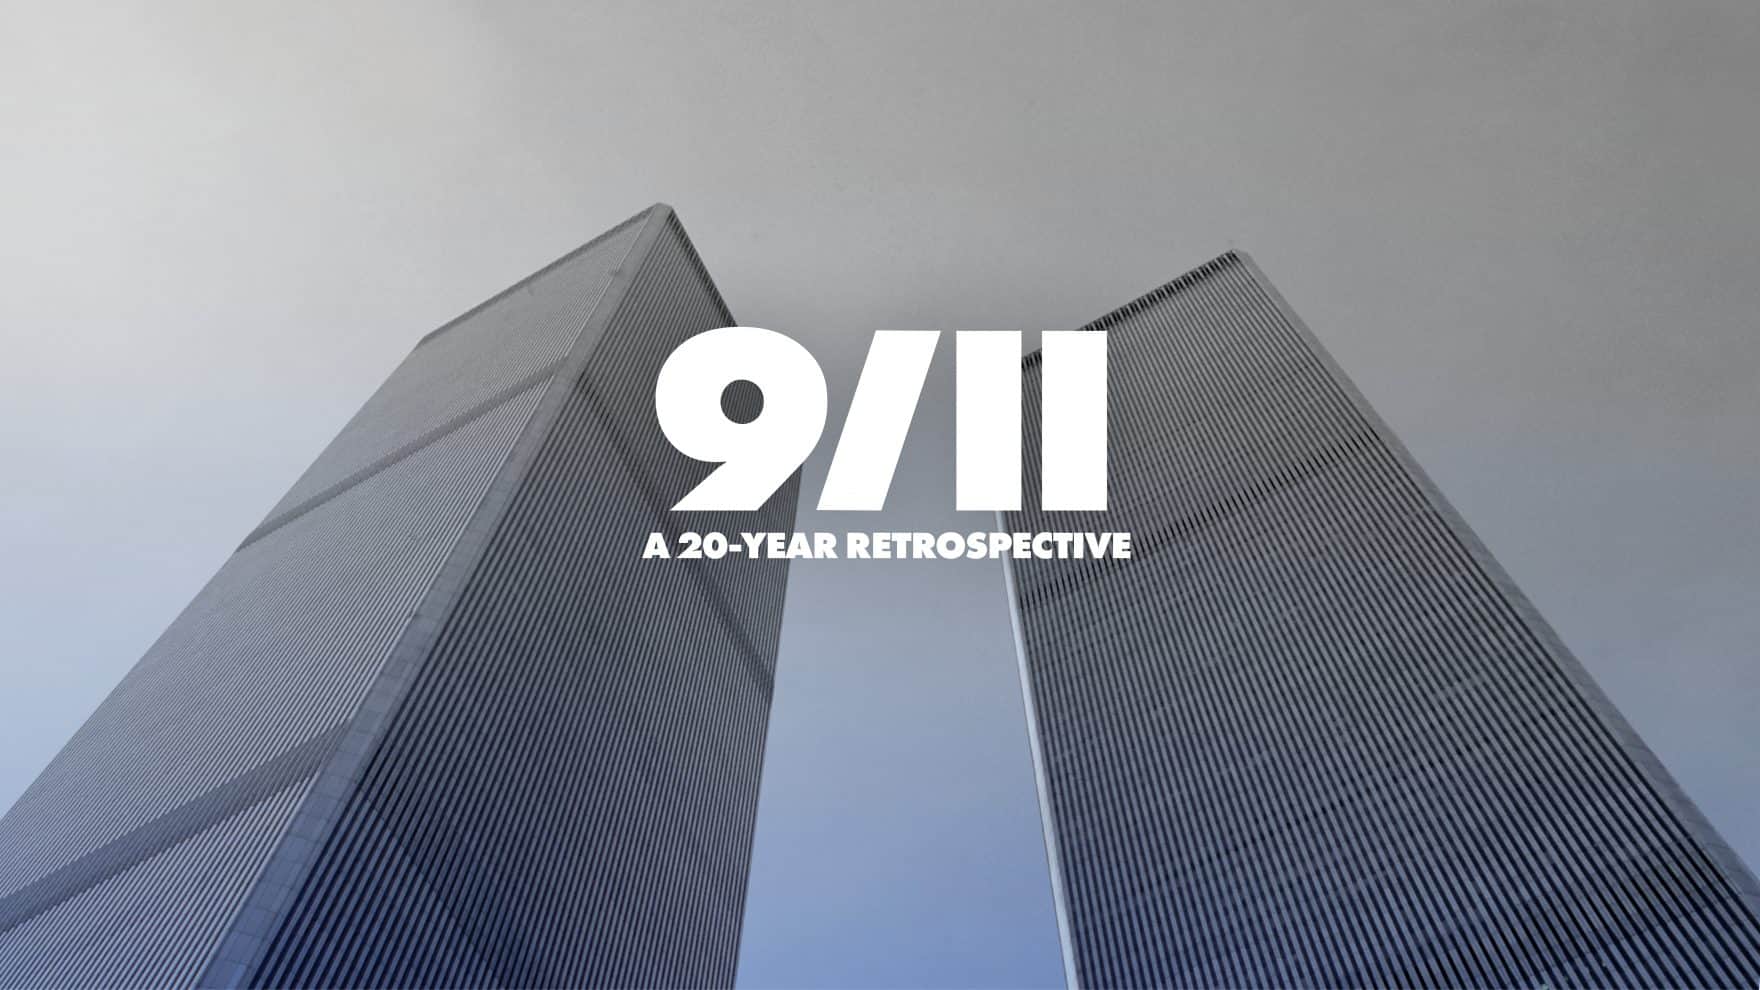 9/11: A 20-year retrospective by Regent University's Robertson School of Government.